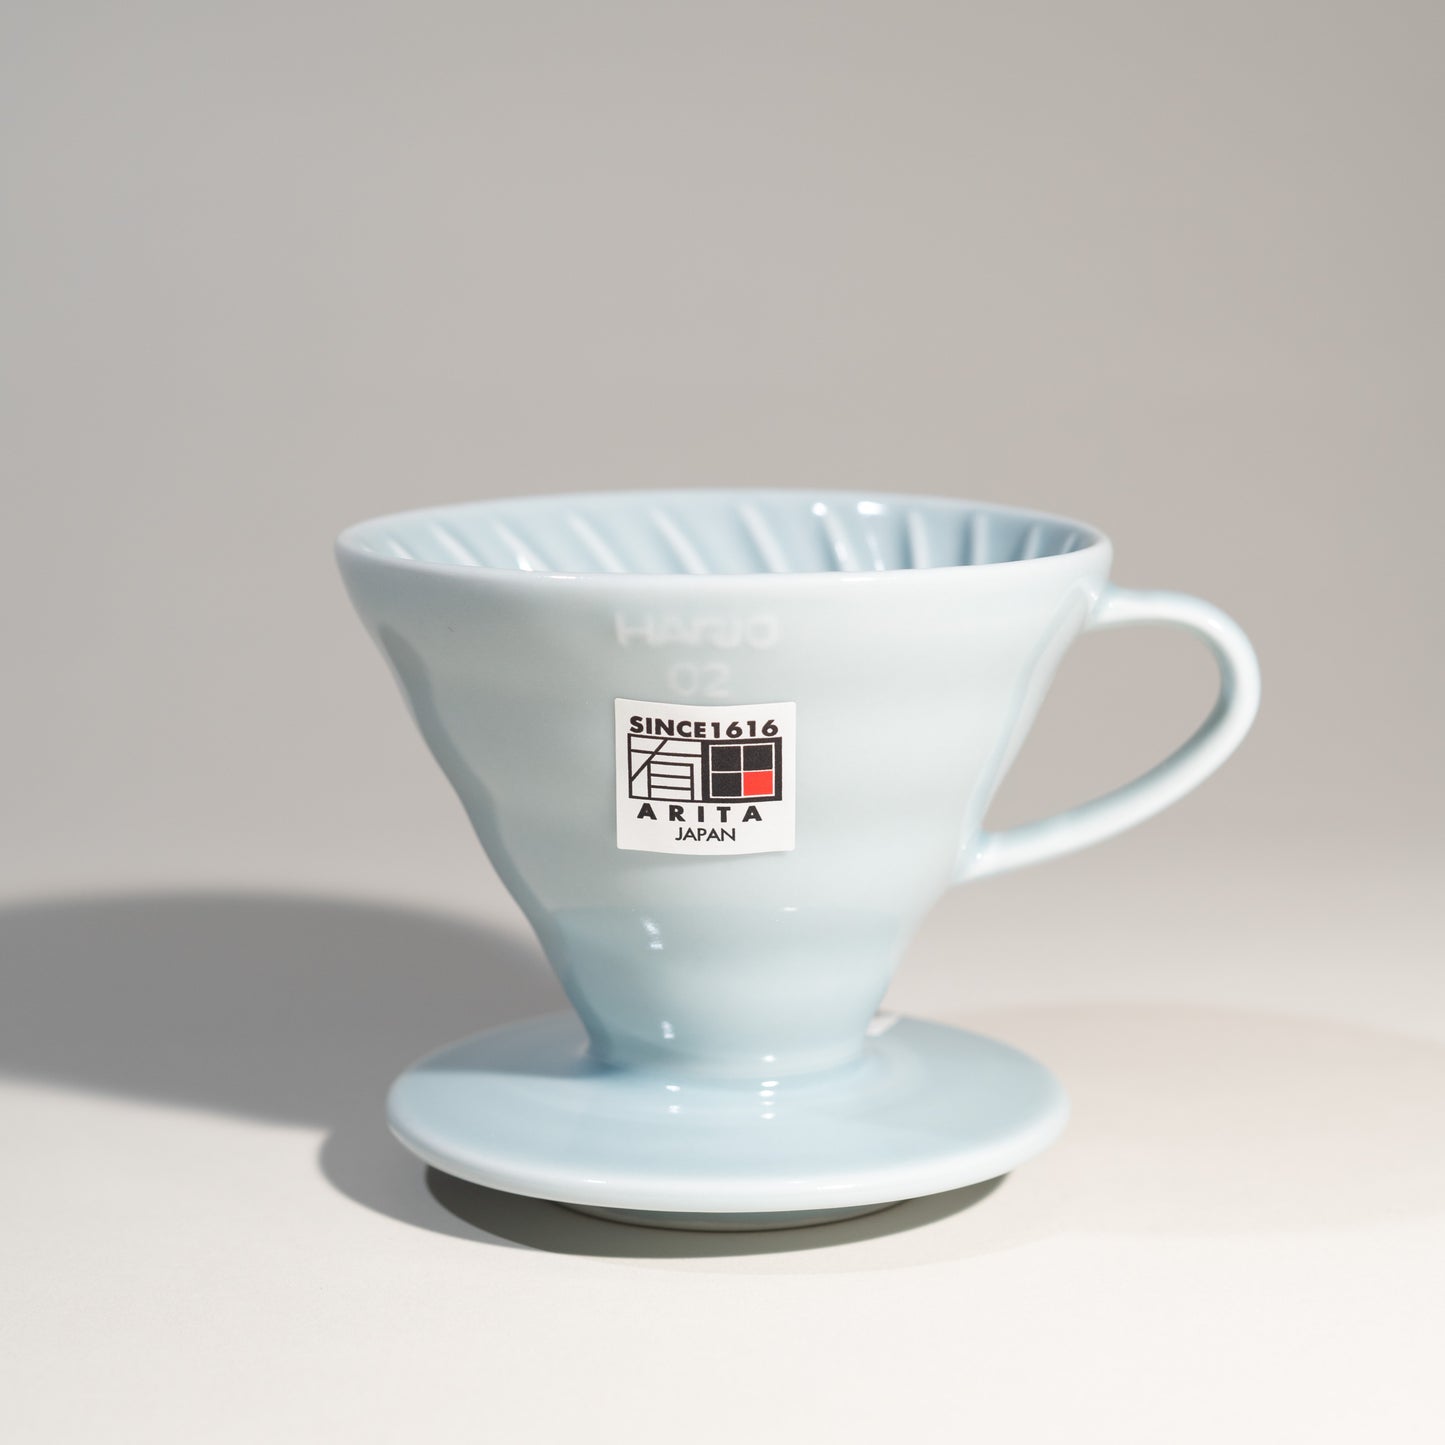 Hario Ceramic v60 02 Blue Grey Coffee Dripper